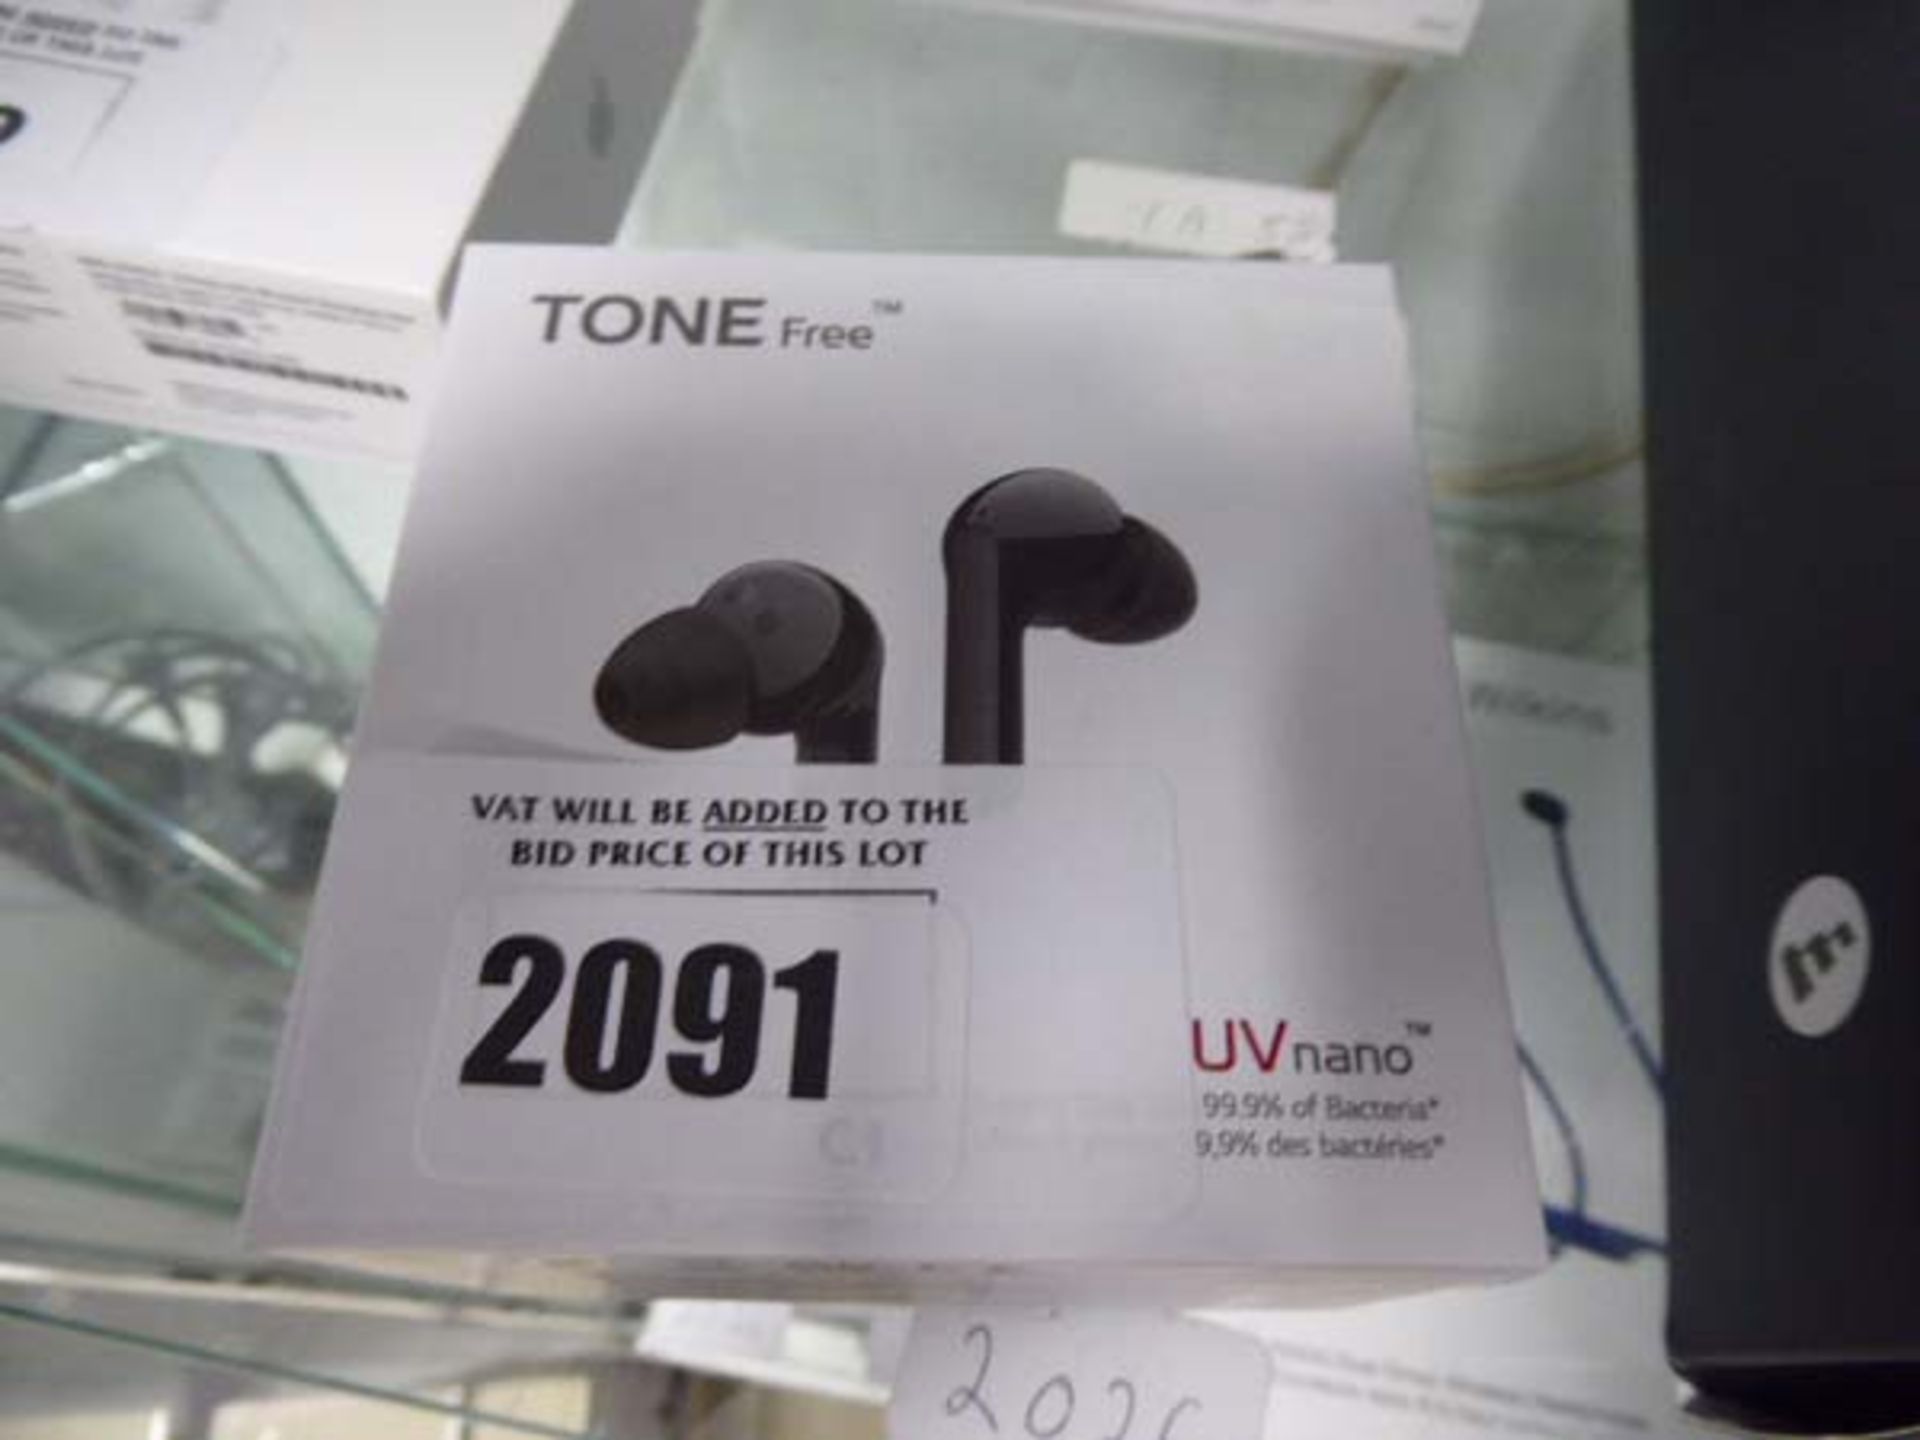 LG Tone free UV nano wireless headset with charging case and box